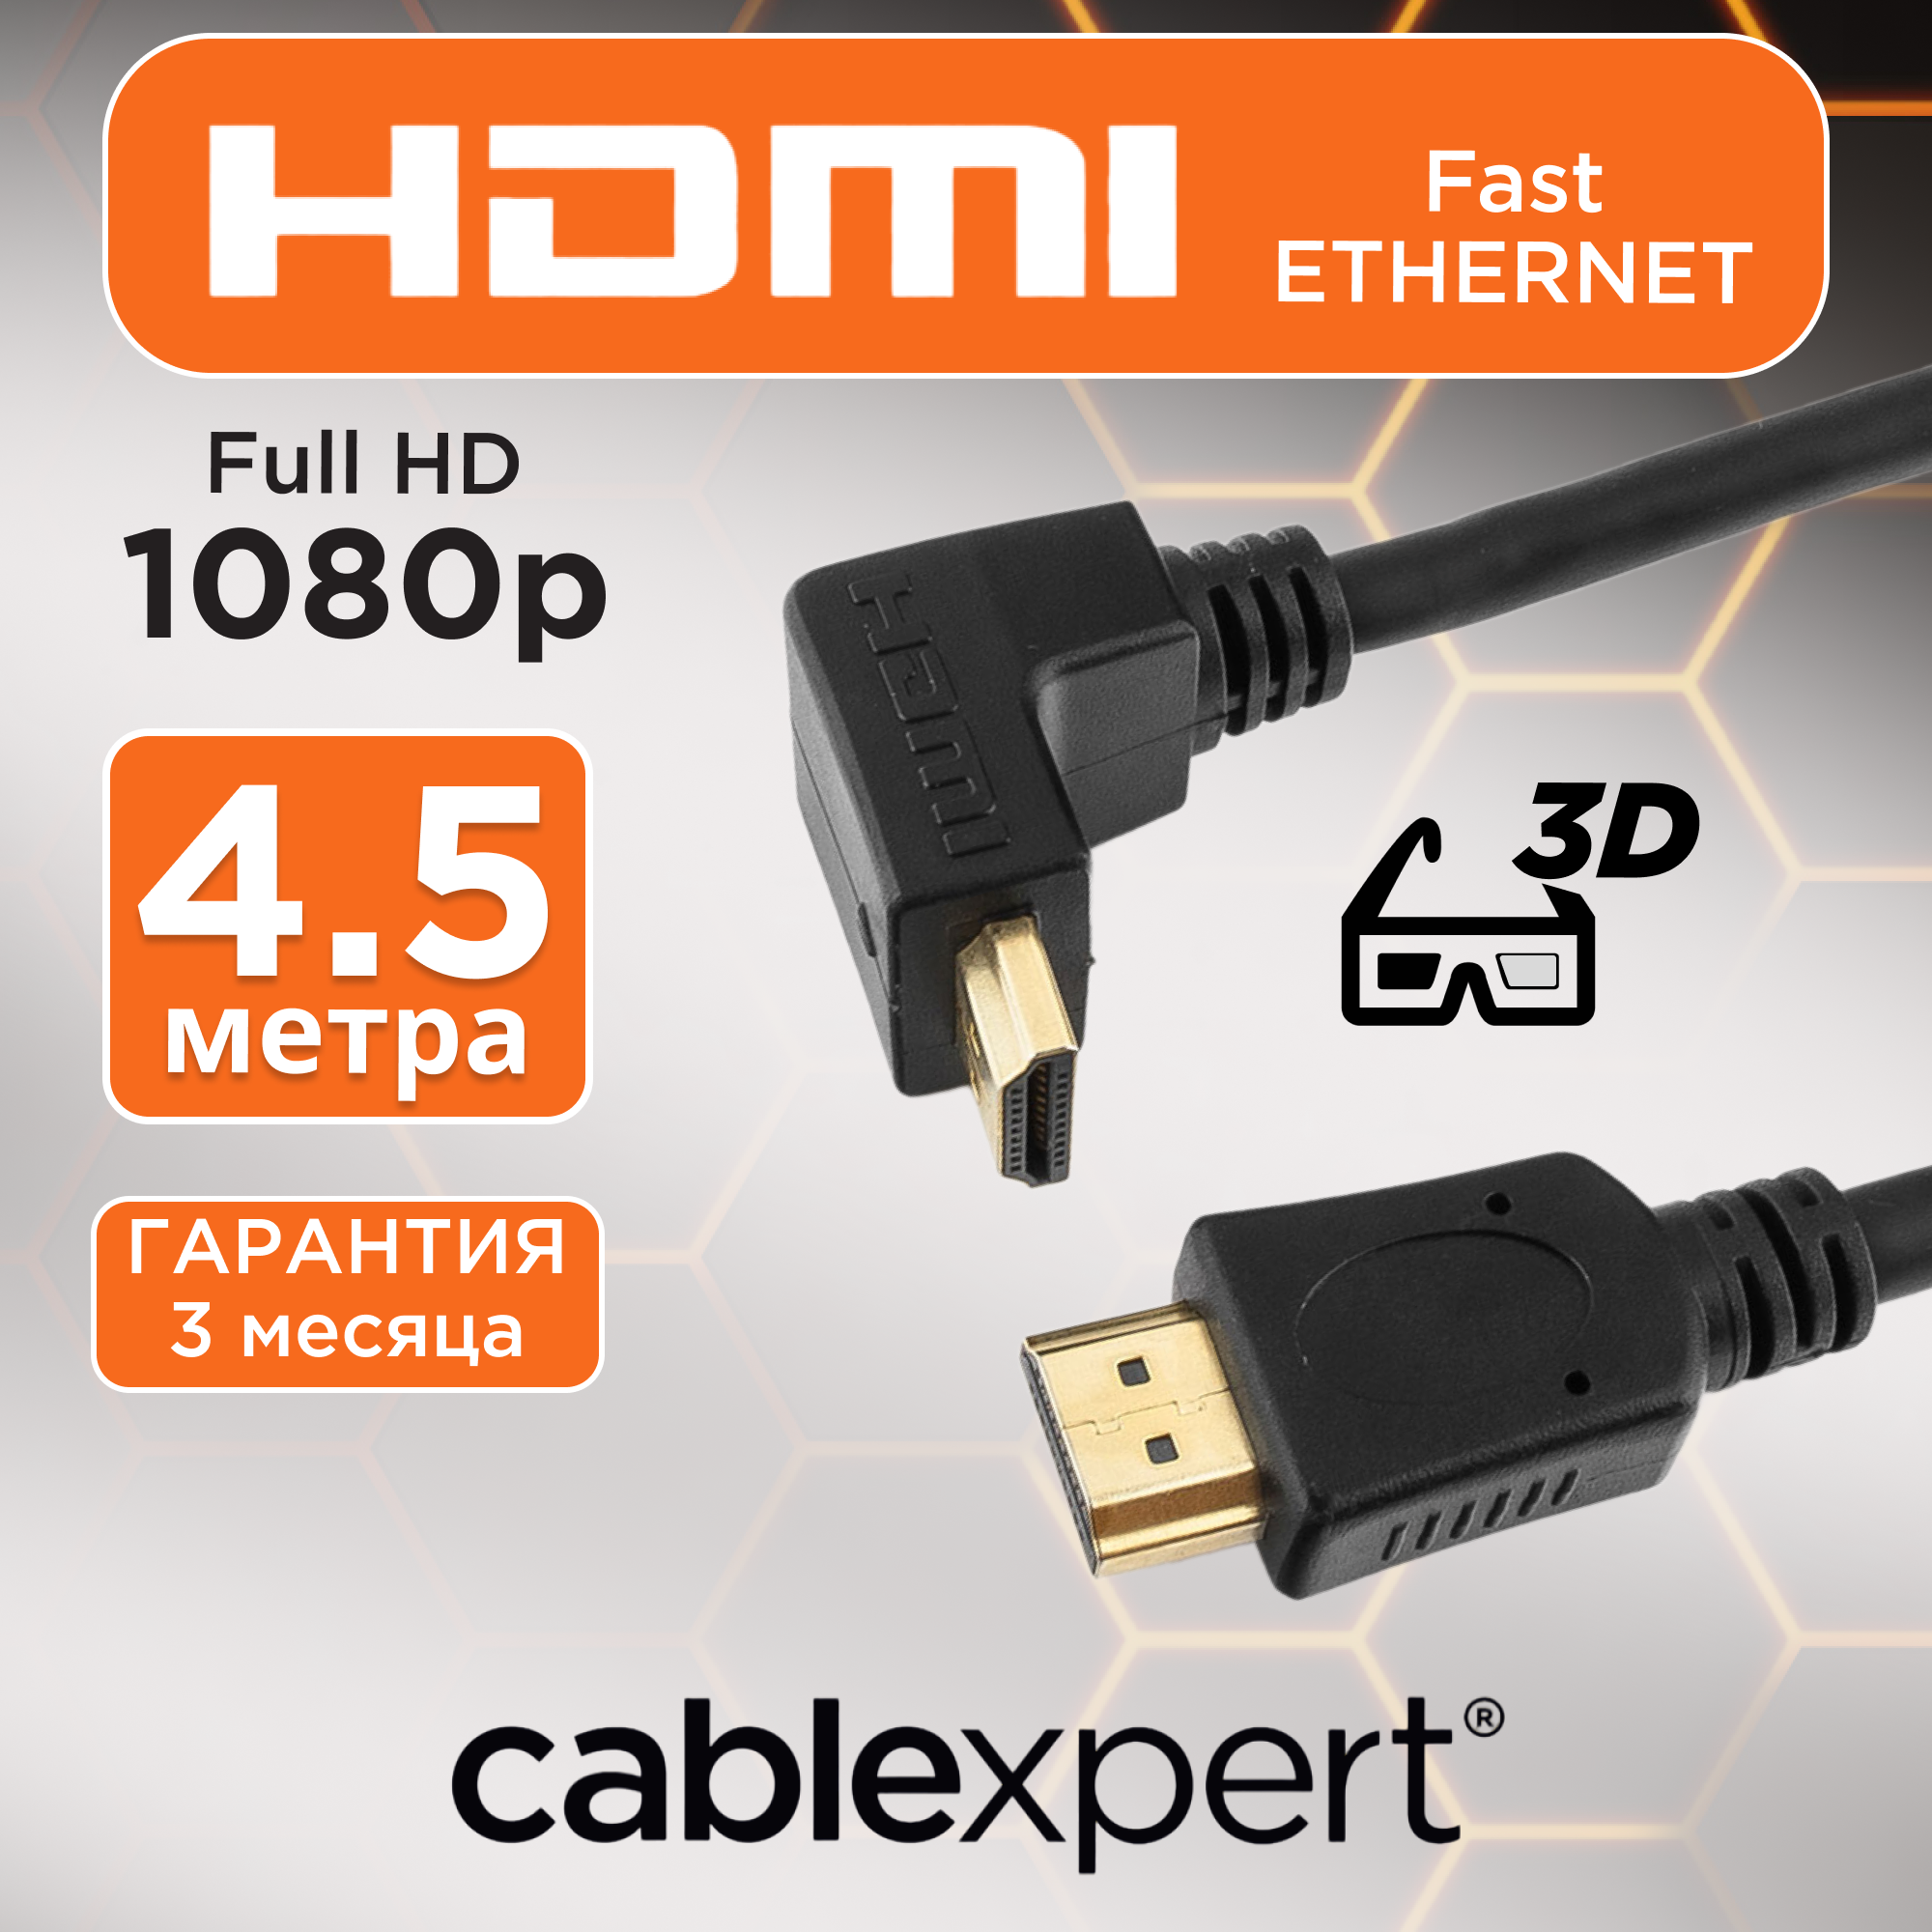 Кабель HDMI Cablexpert CC-HDMI490-15 19М/19М V1.4 угловой разъём - 4.5 метра